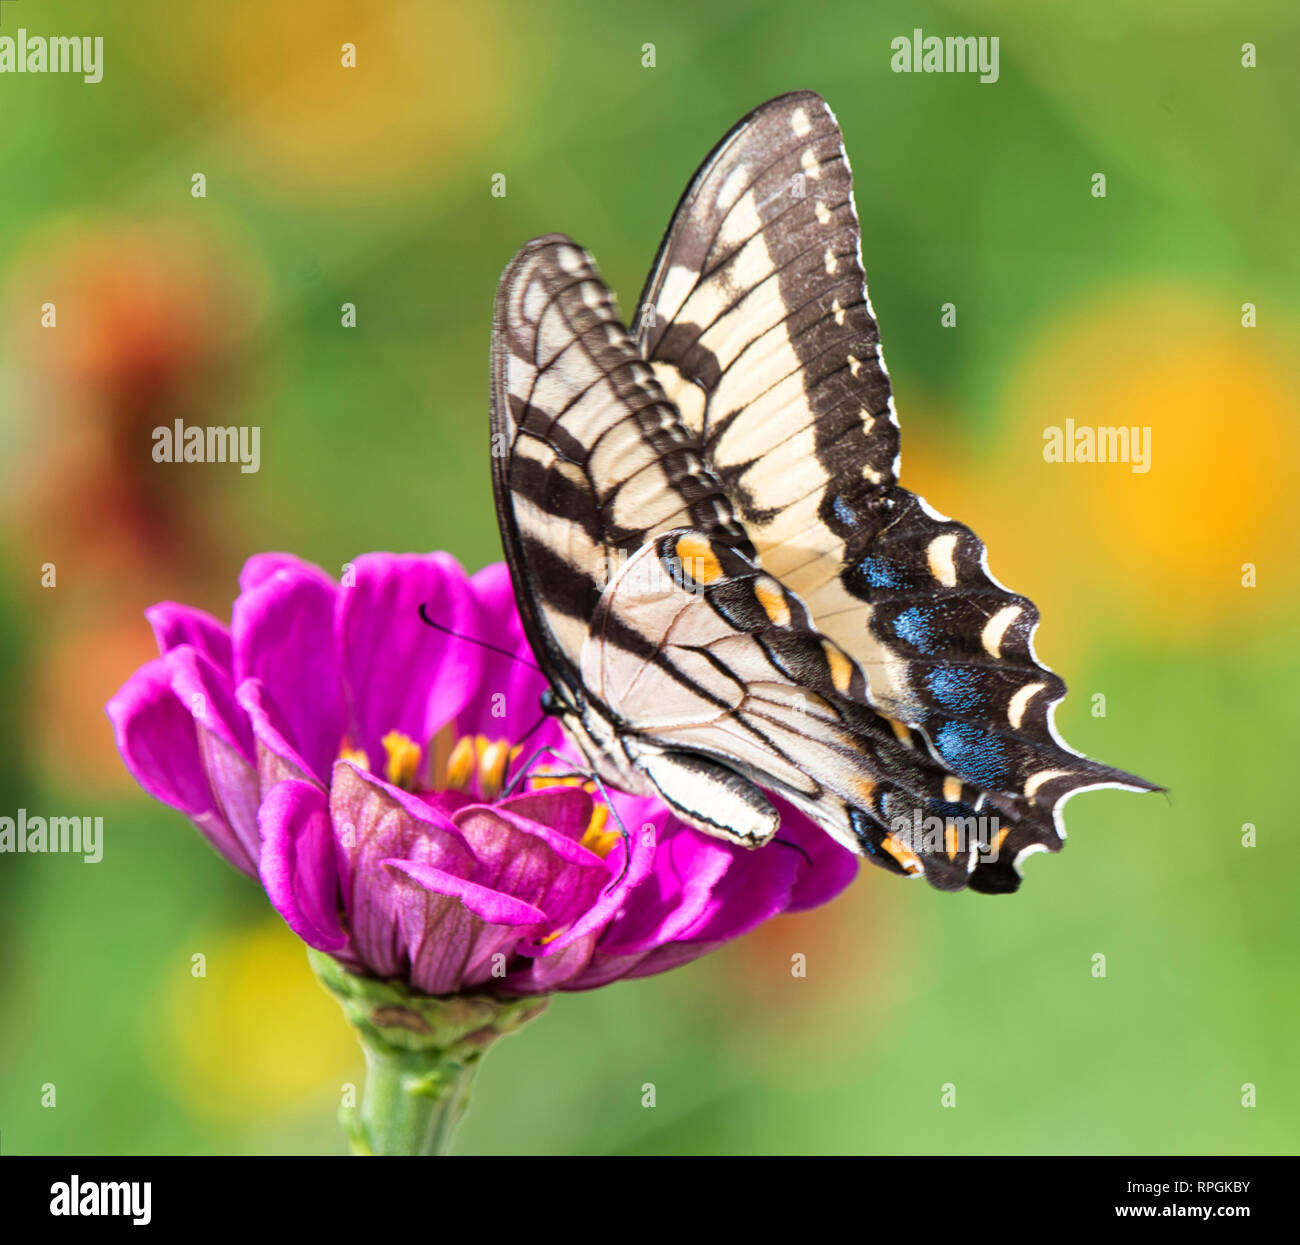 Tiger Swallowtail Butterfly, Zinnia Flower Stock Photo